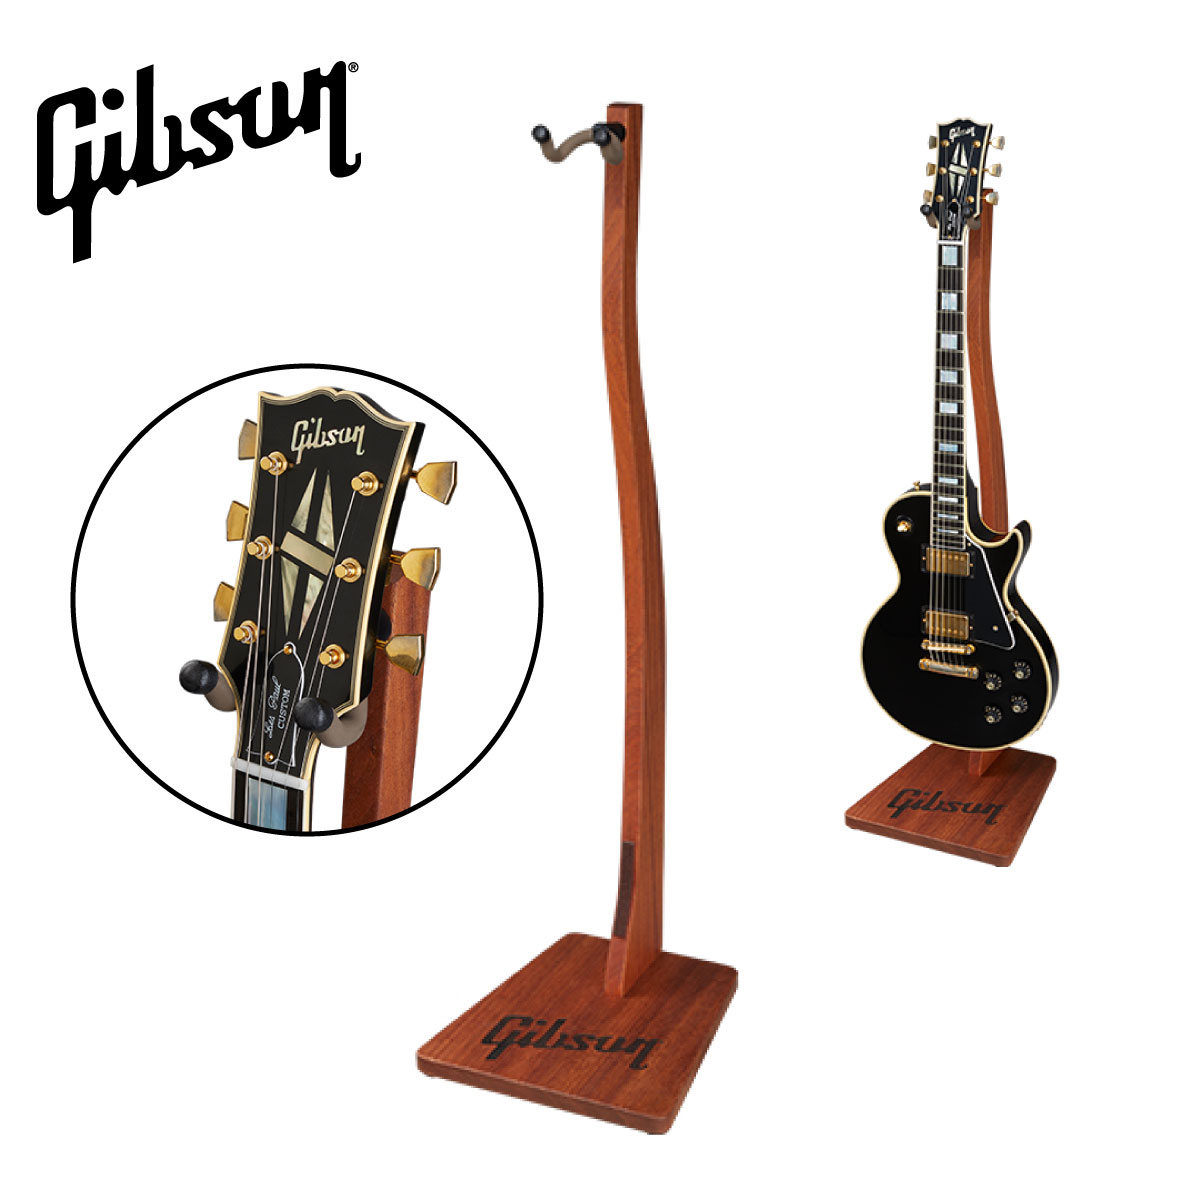 Gibson Handcrafted Wooden Guitar Stand -Mahogany- 新品  ギタースタンド[ギブソン][マホガニー][ギタースタンド] | ギタープラネットOnline